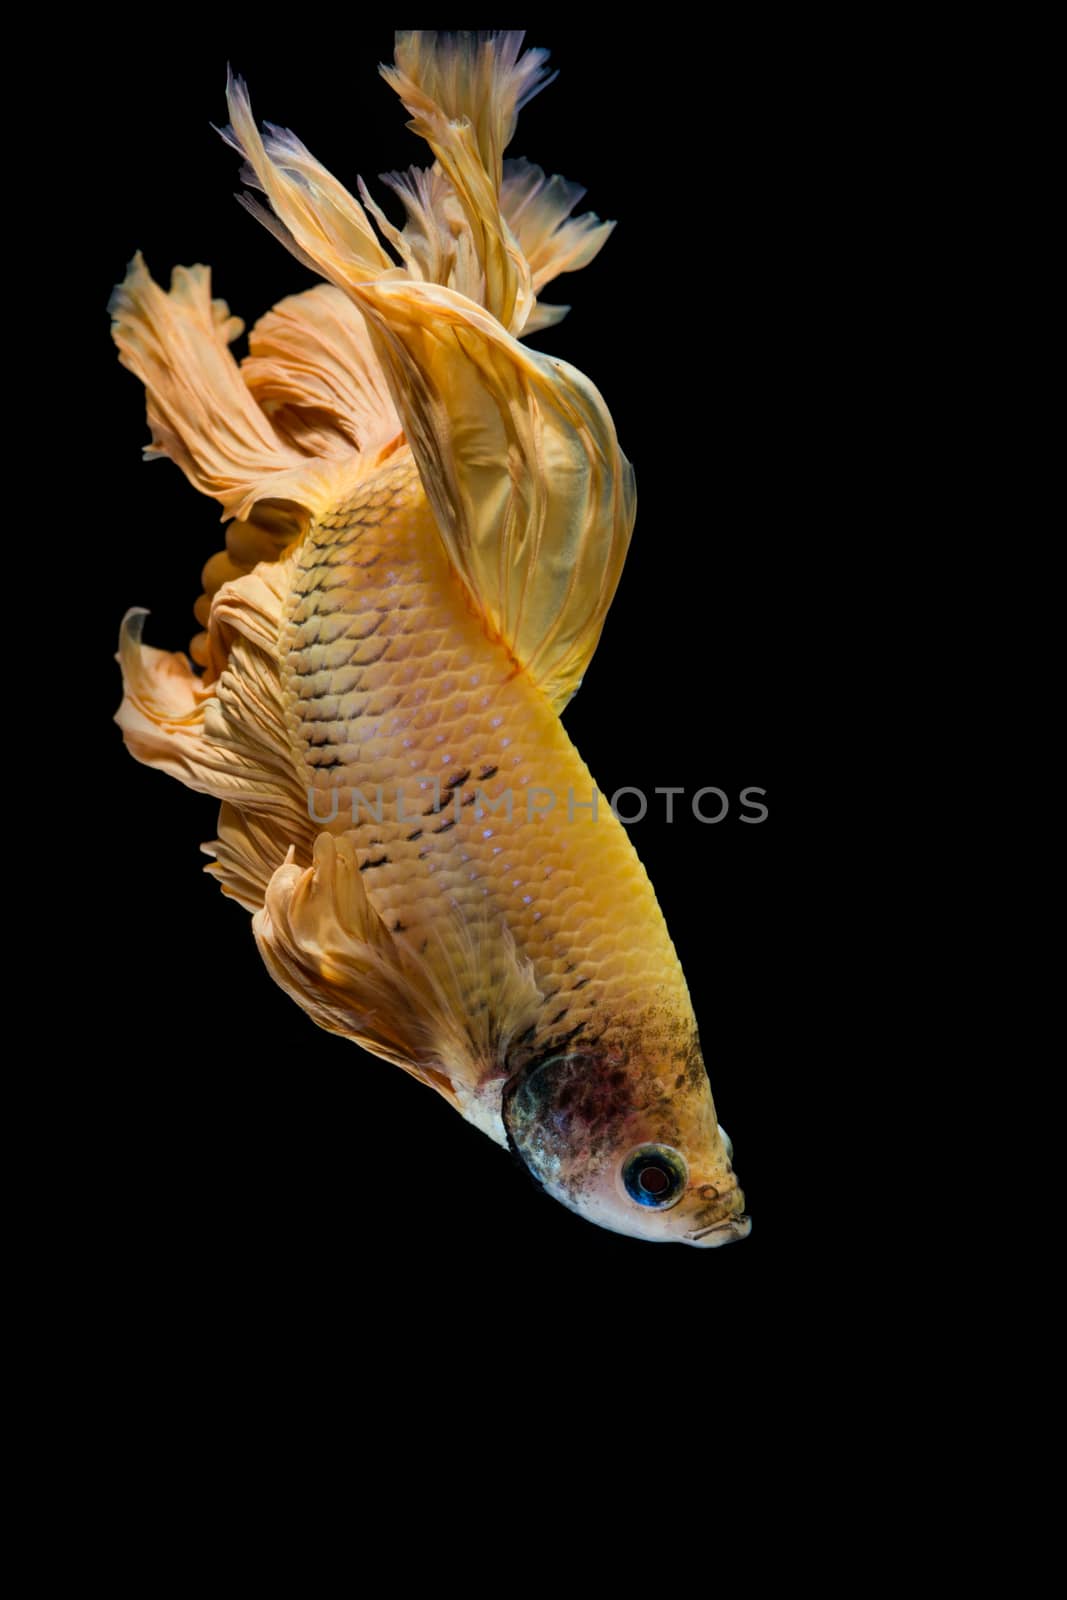 Yellow gold betta fish, siamese fighting fish on black background